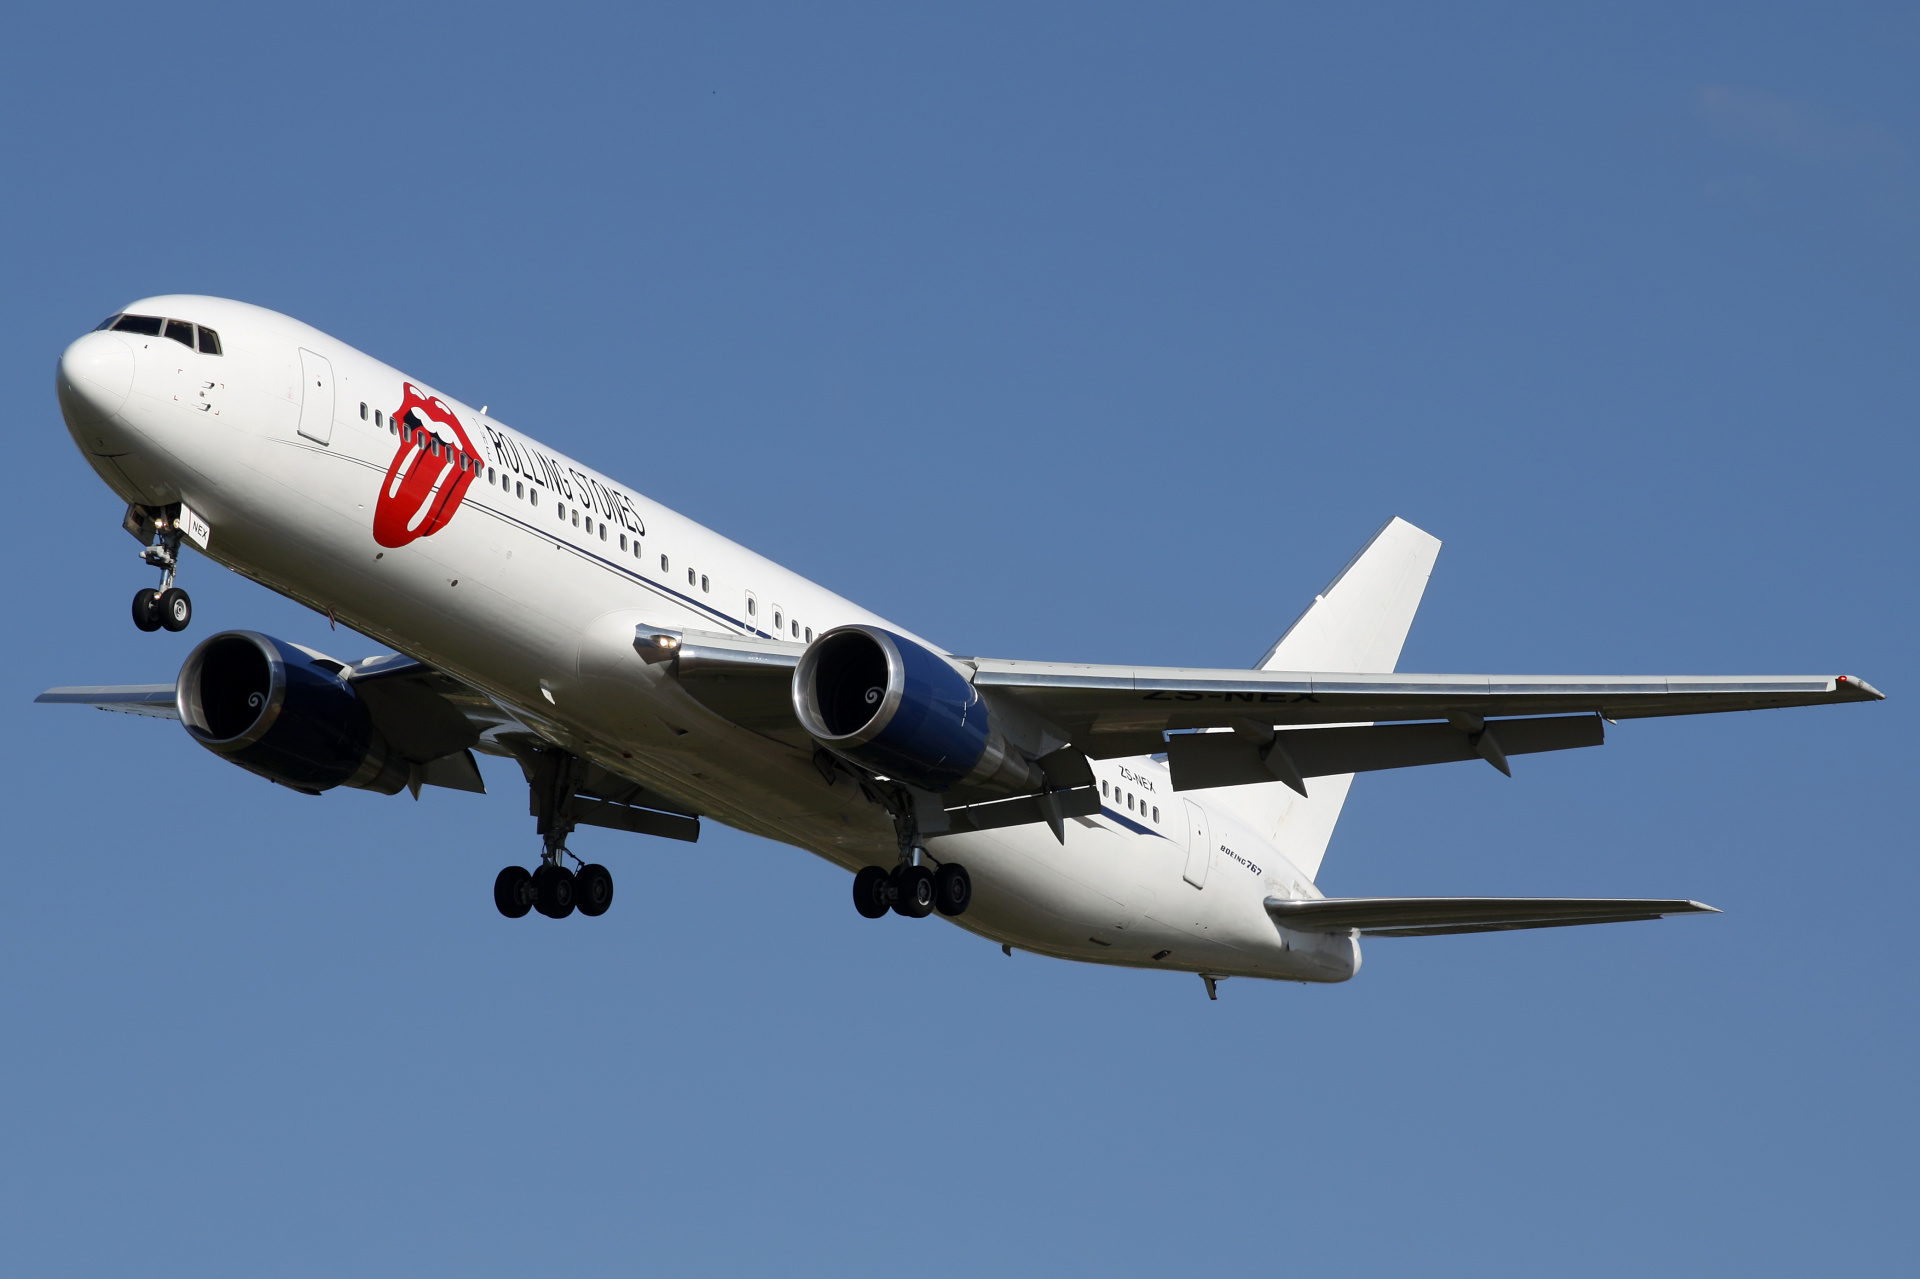 ZS-NEX, Aeronexus (The Rolling Stones livery) (Aircraft » EPWA Spotting » Boeing 767-300)